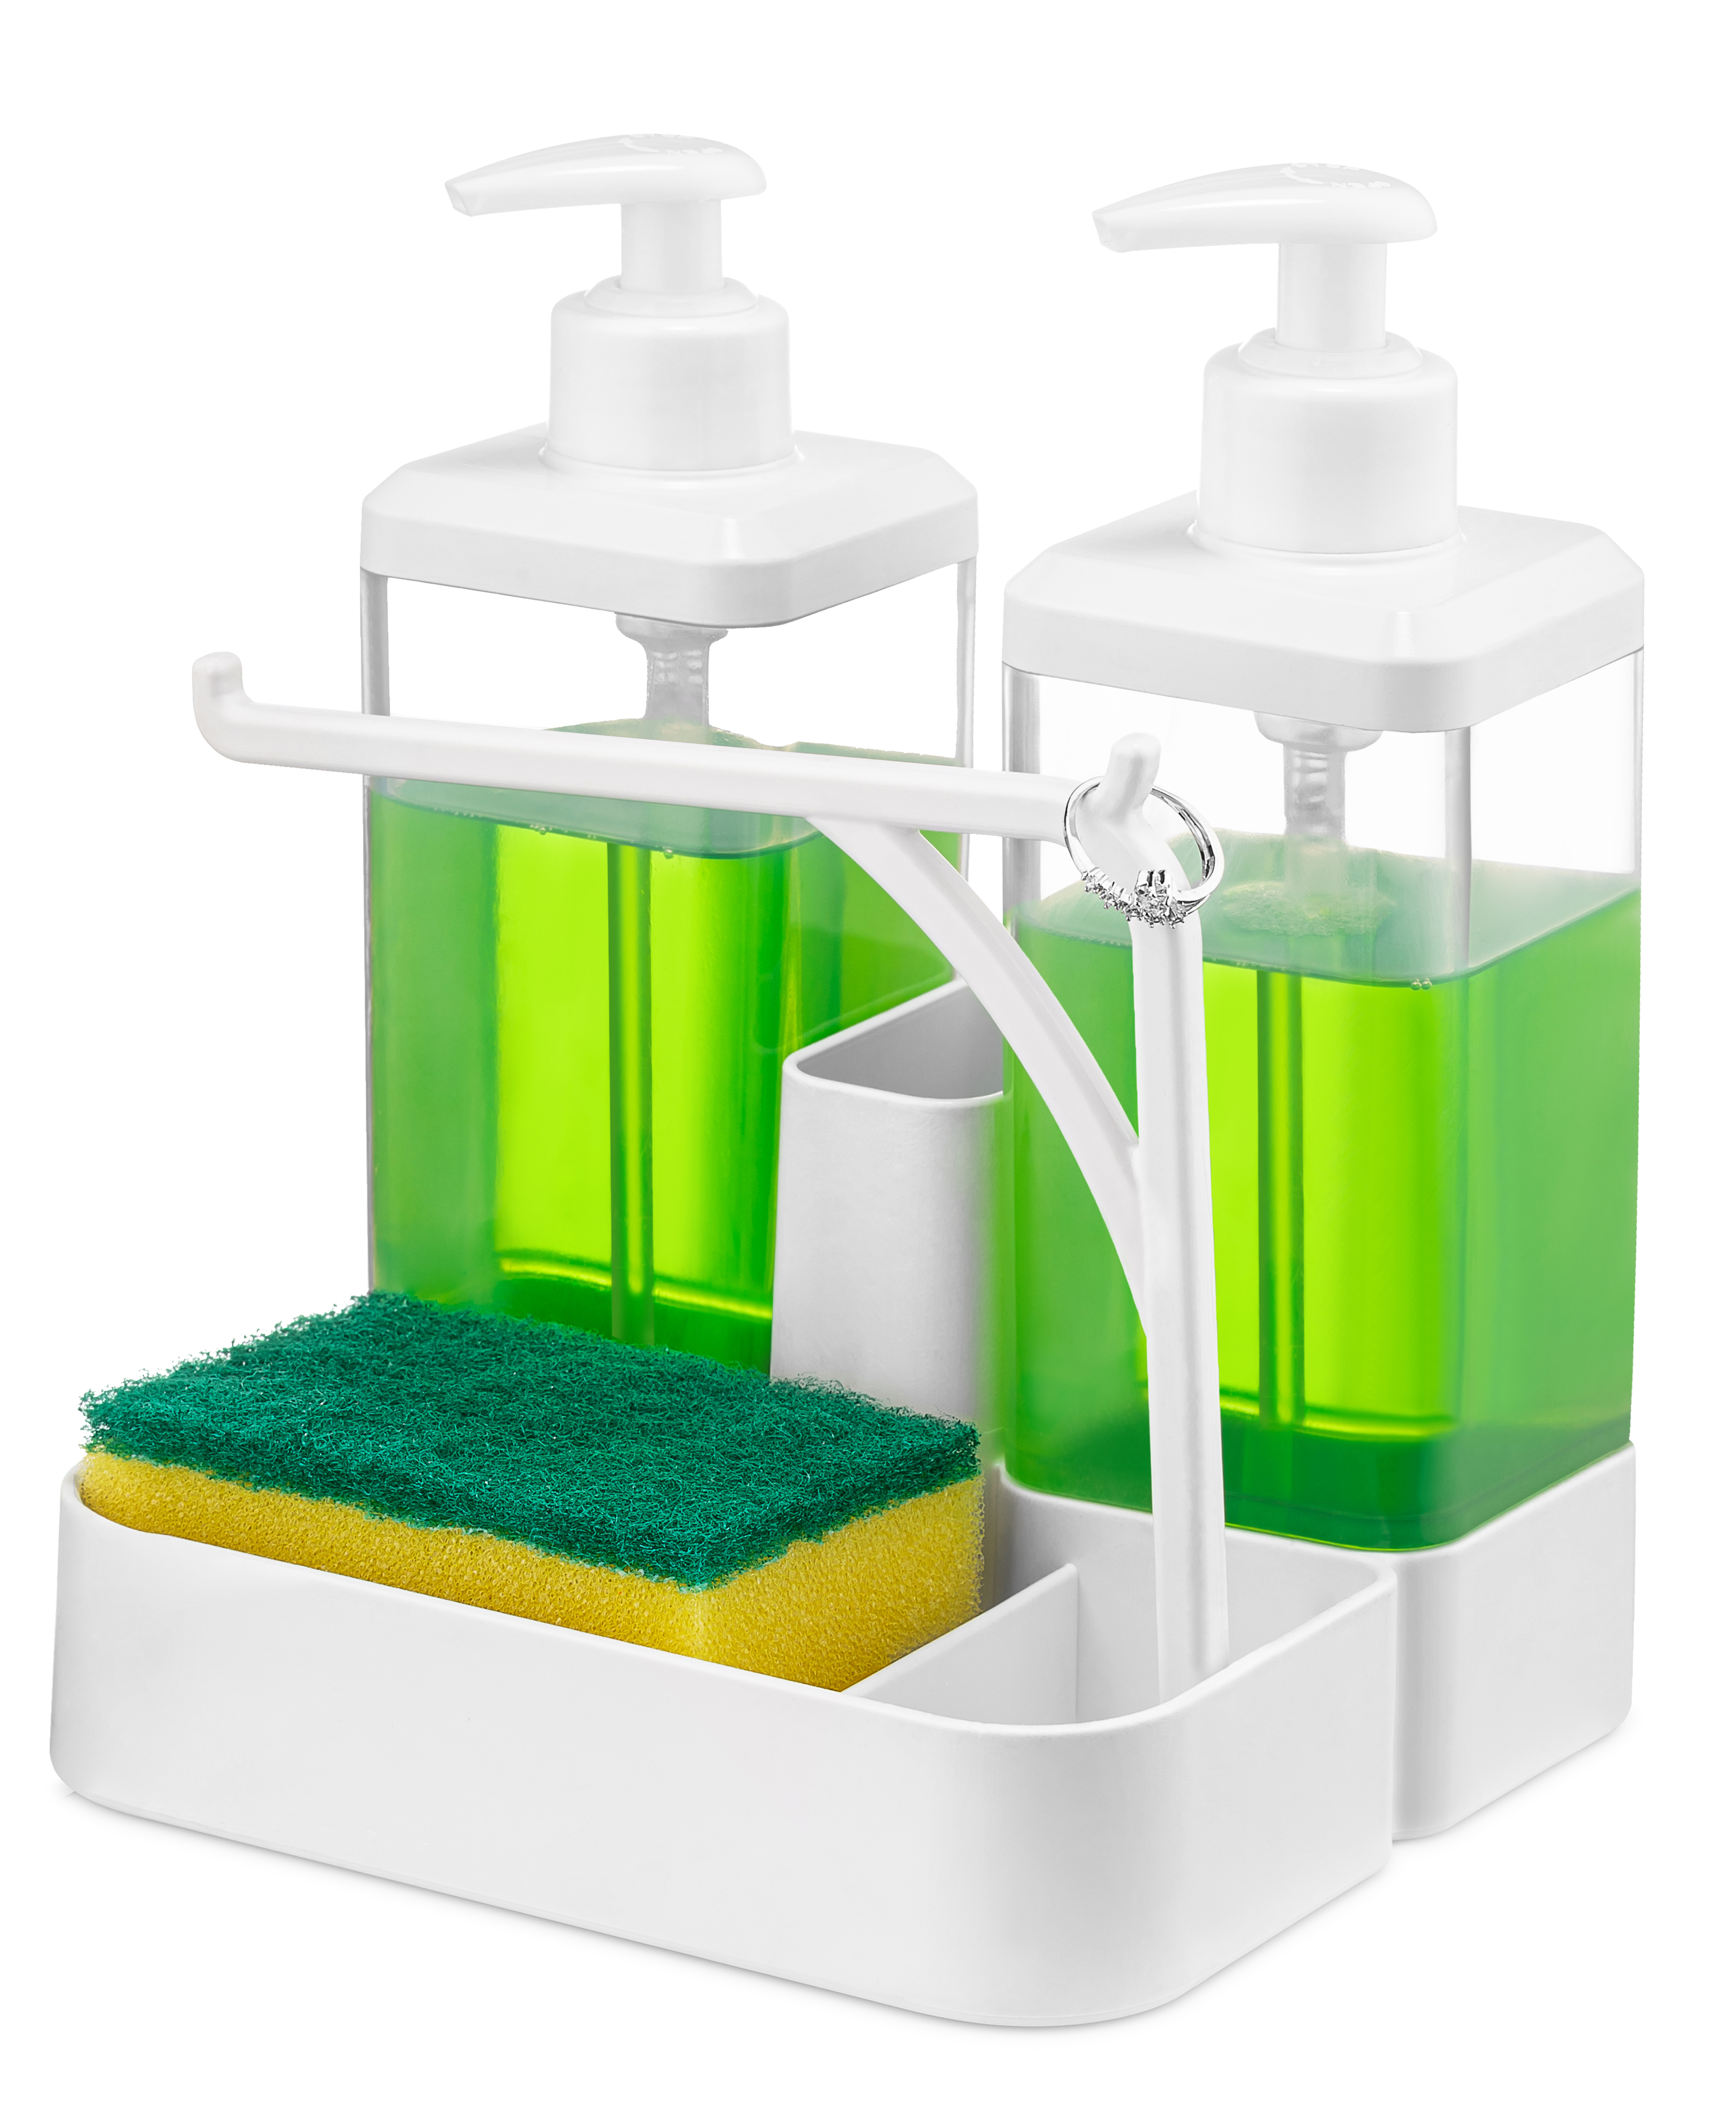 AWION Double Liquid Soap Dispenser and Set